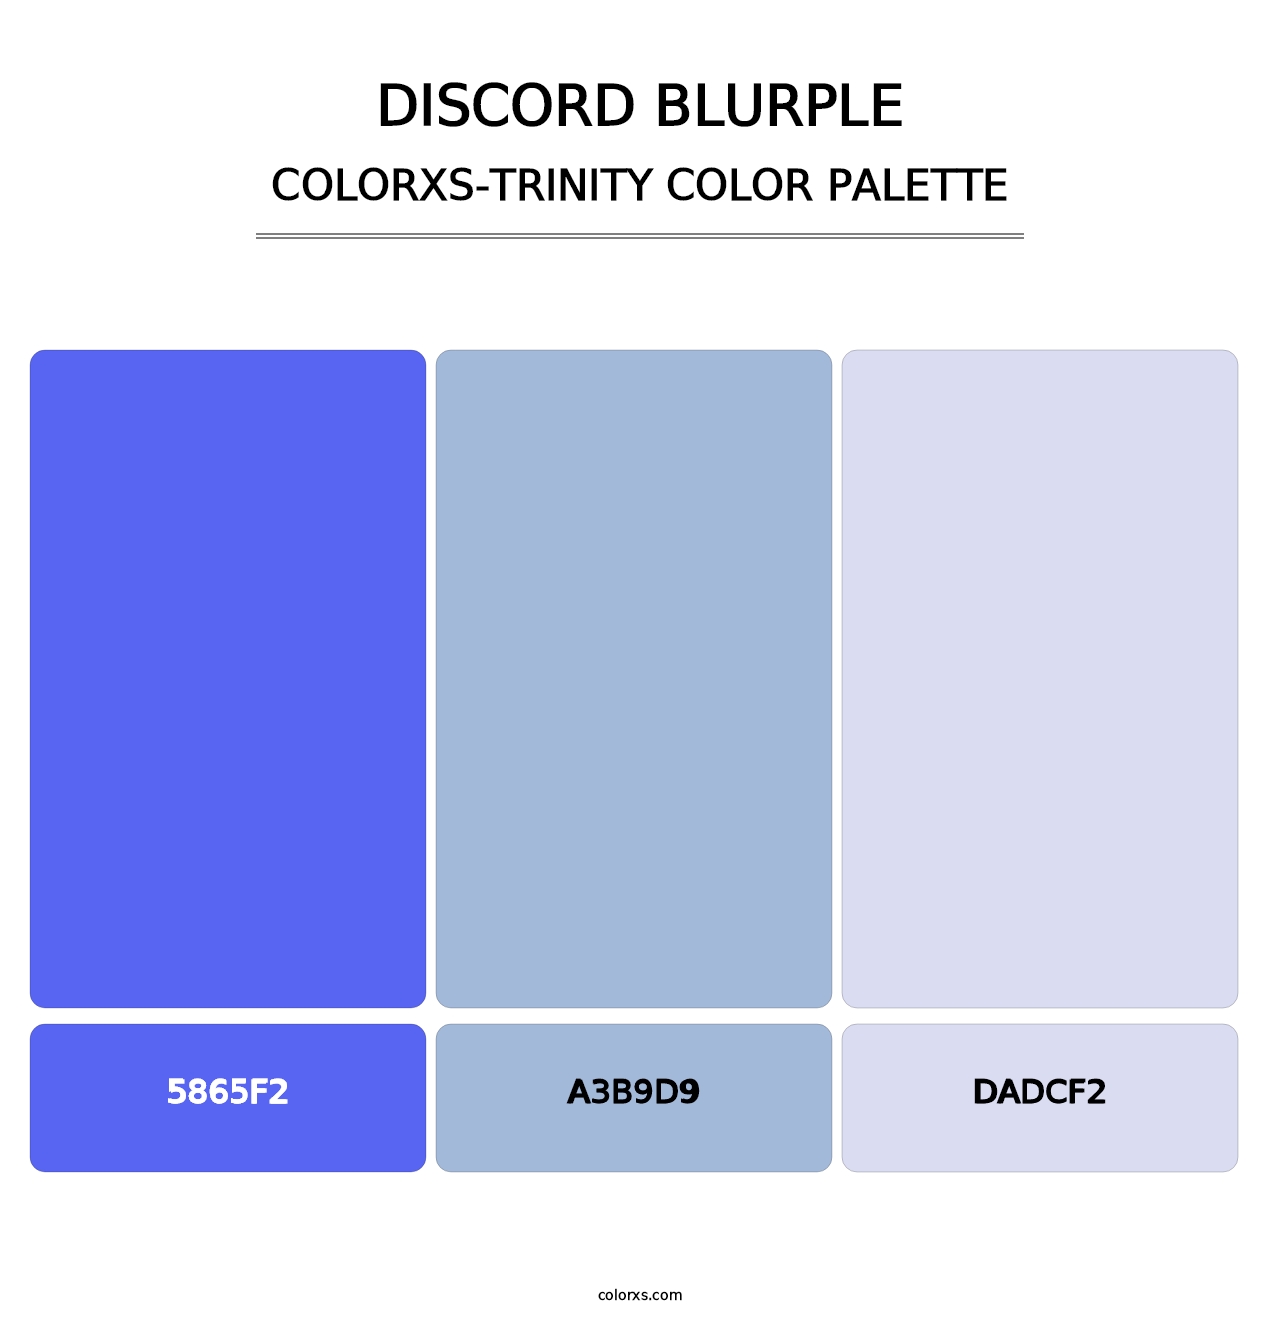 Discord Blurple - Colorxs Trinity Palette